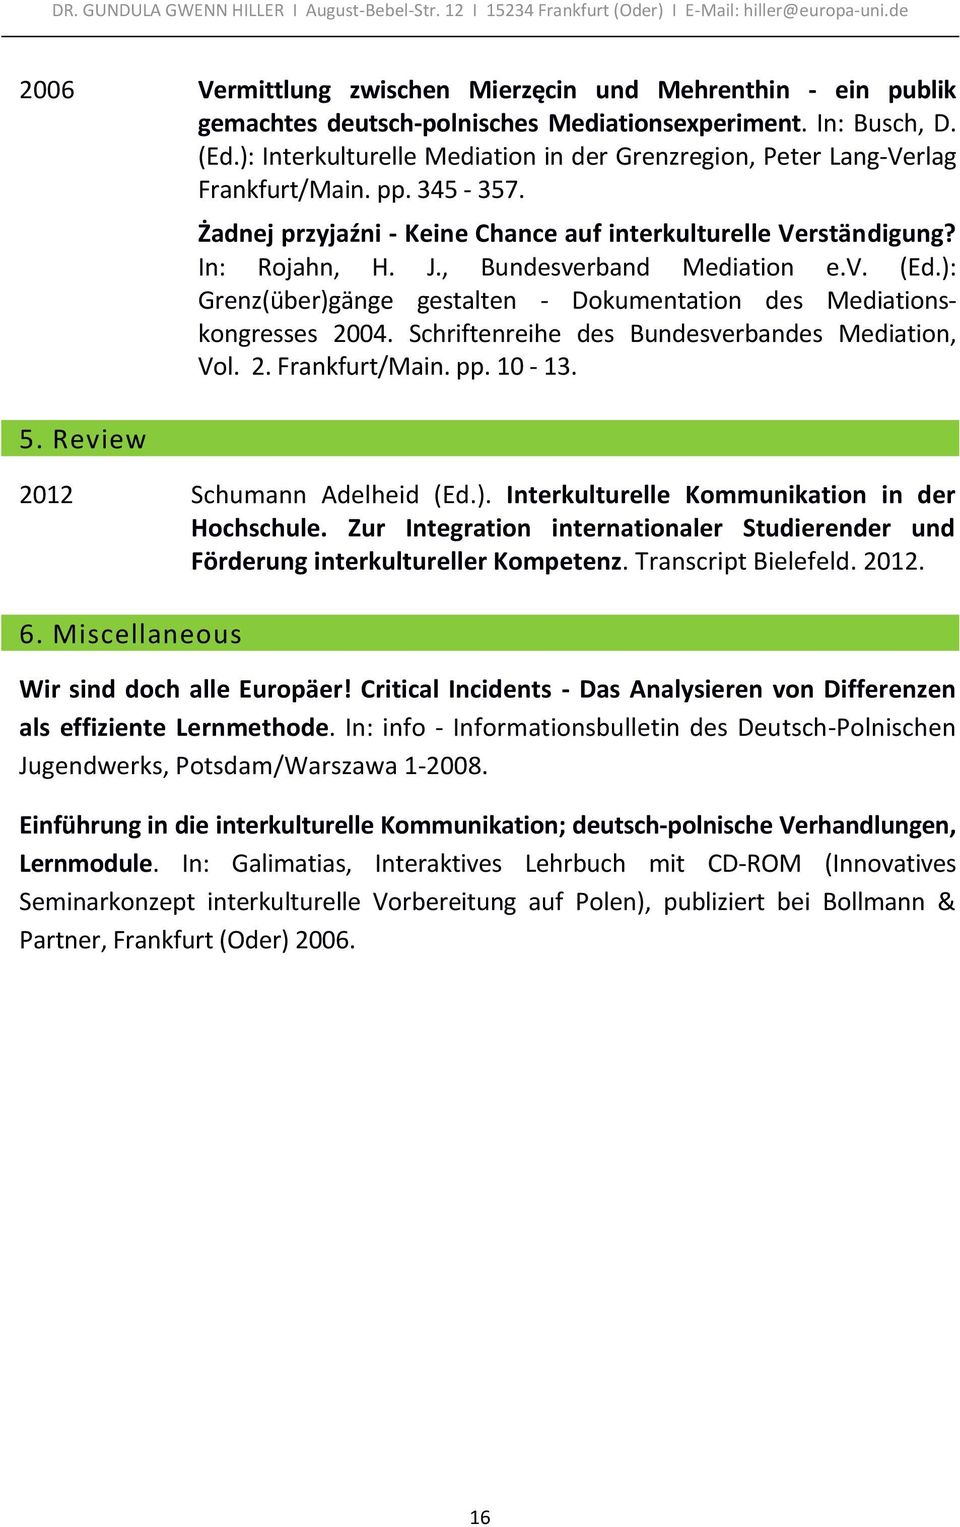 , Bundesverband Mediation e.v. (Ed.): Grenz(über)gänge gestalten - Dokumentation des Mediationskongresses 2004. Schriftenreihe des Bundesverbandes Mediation, Vol. 2. Frankfurt/Main. pp. 10-13.